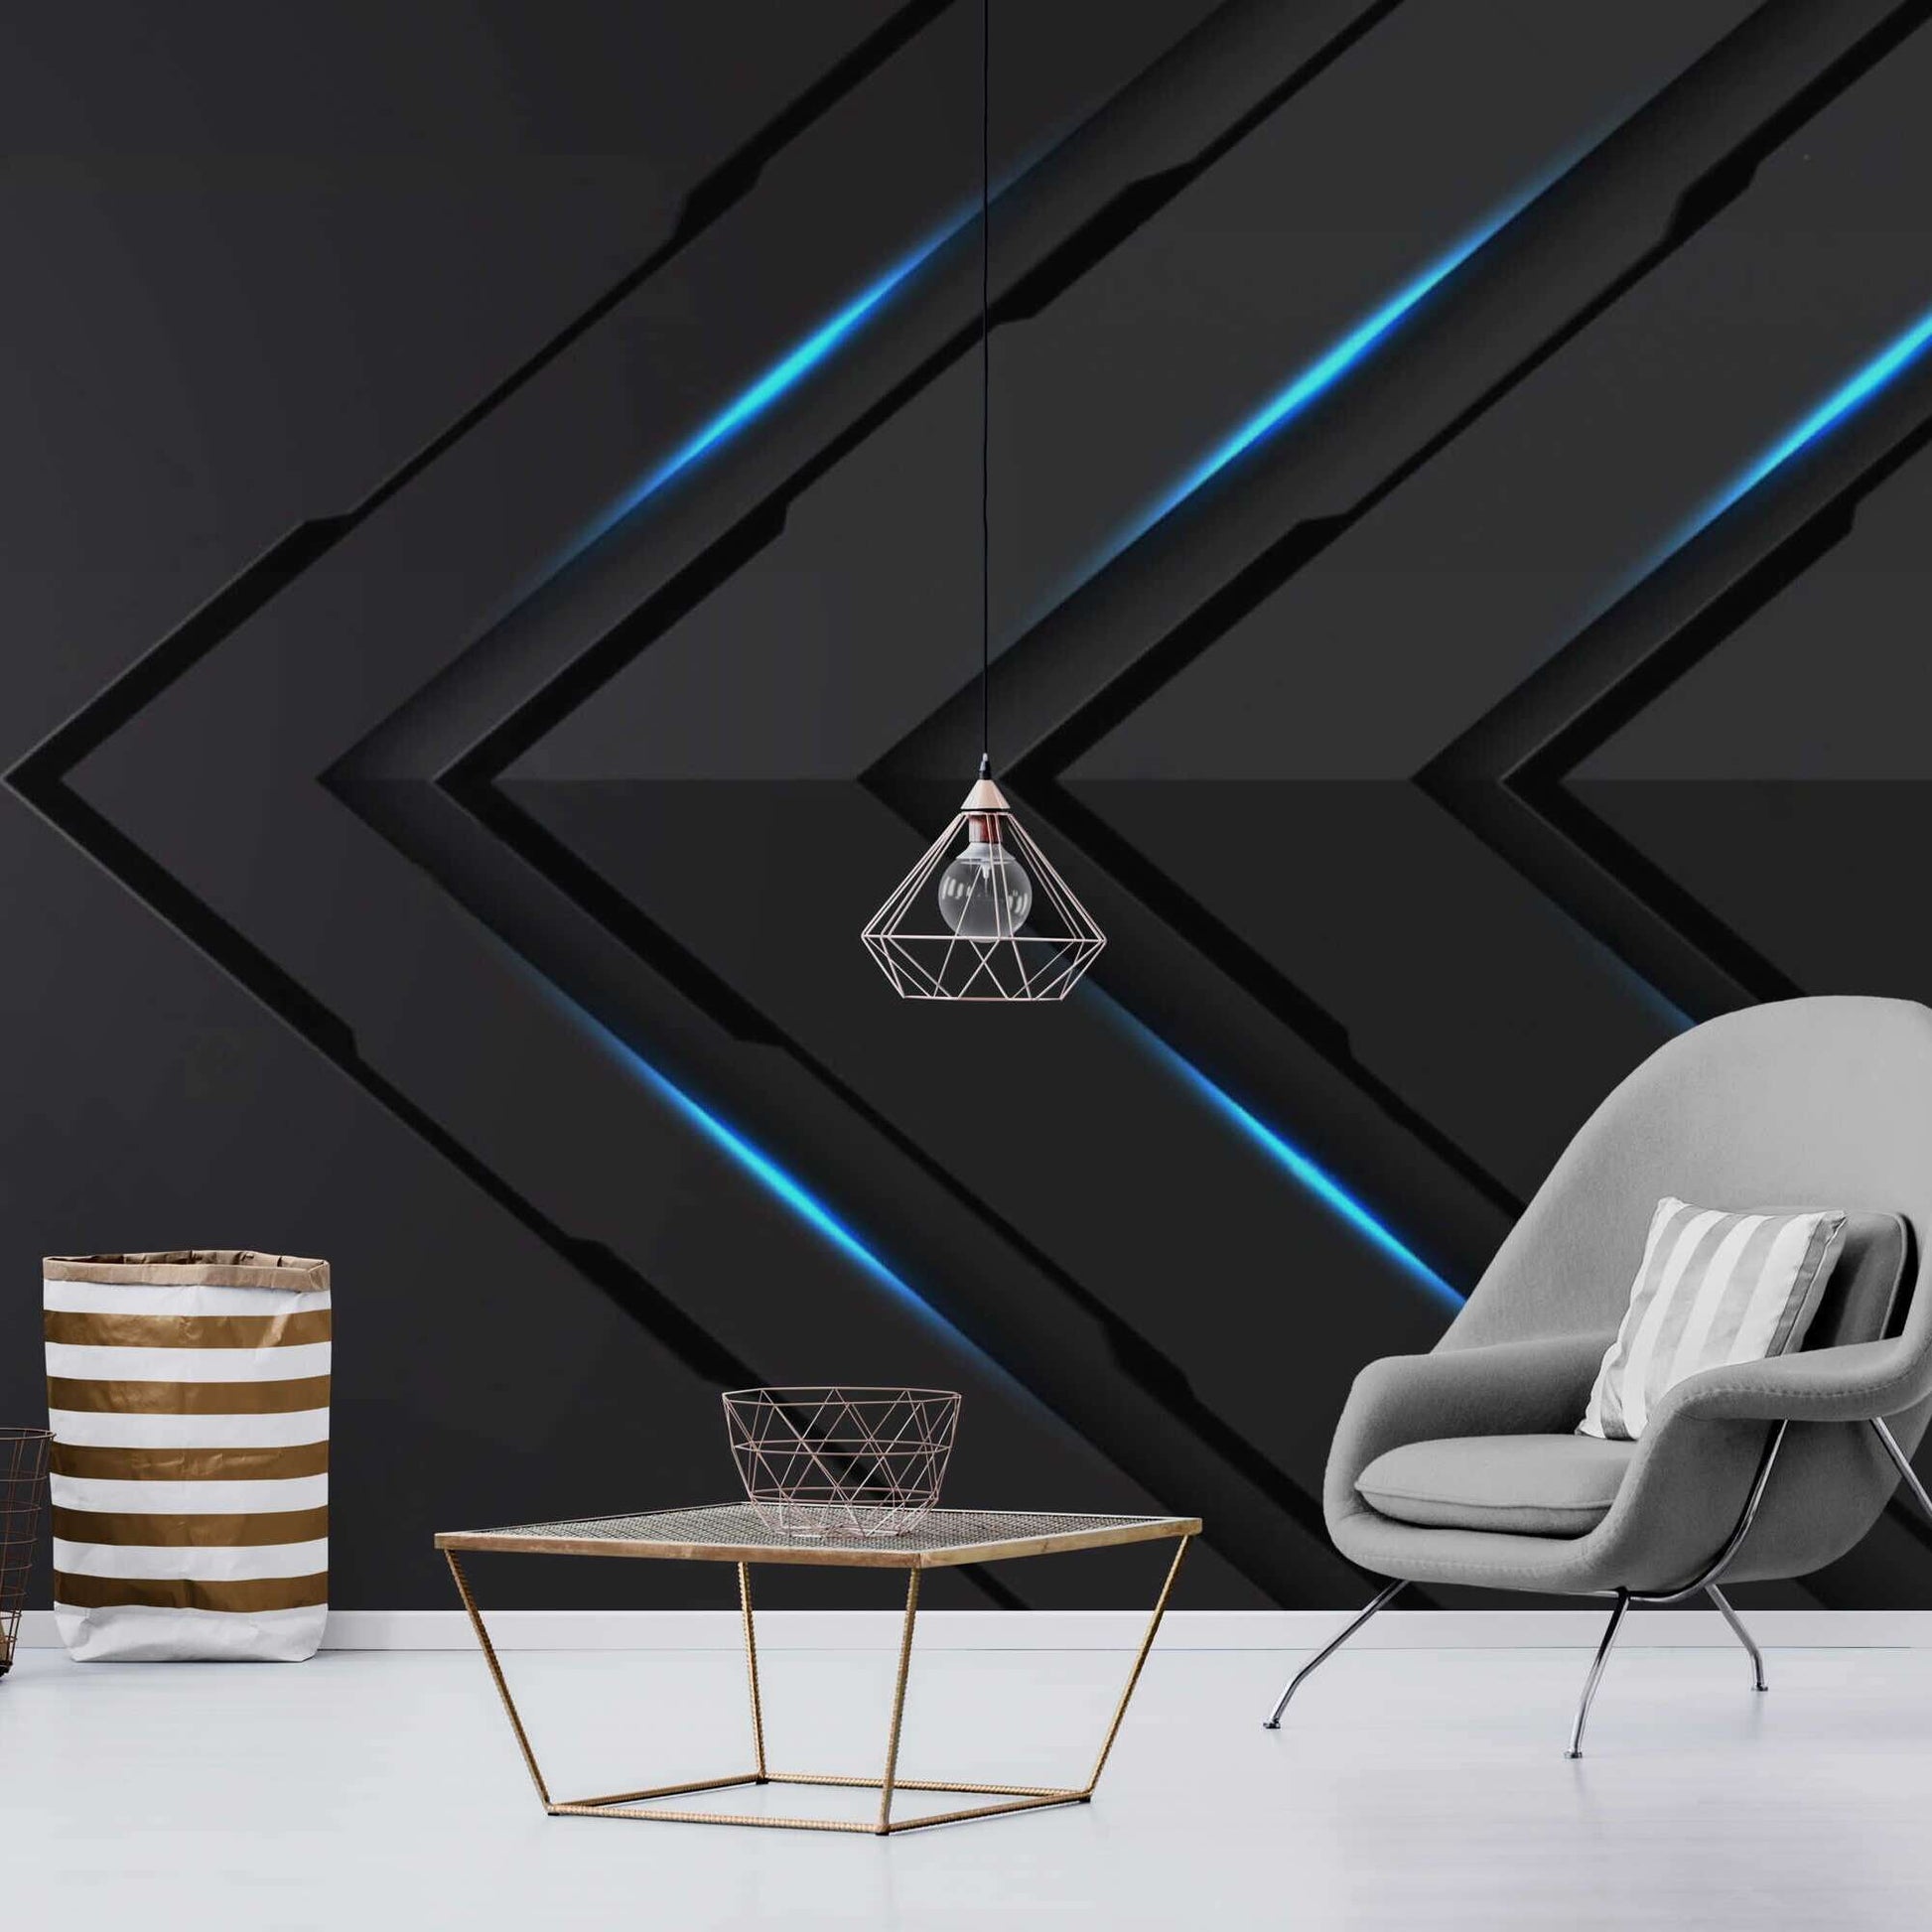 Cyber wallpaper showcasing futuristic 3D design, adding depth and dimension to the room.